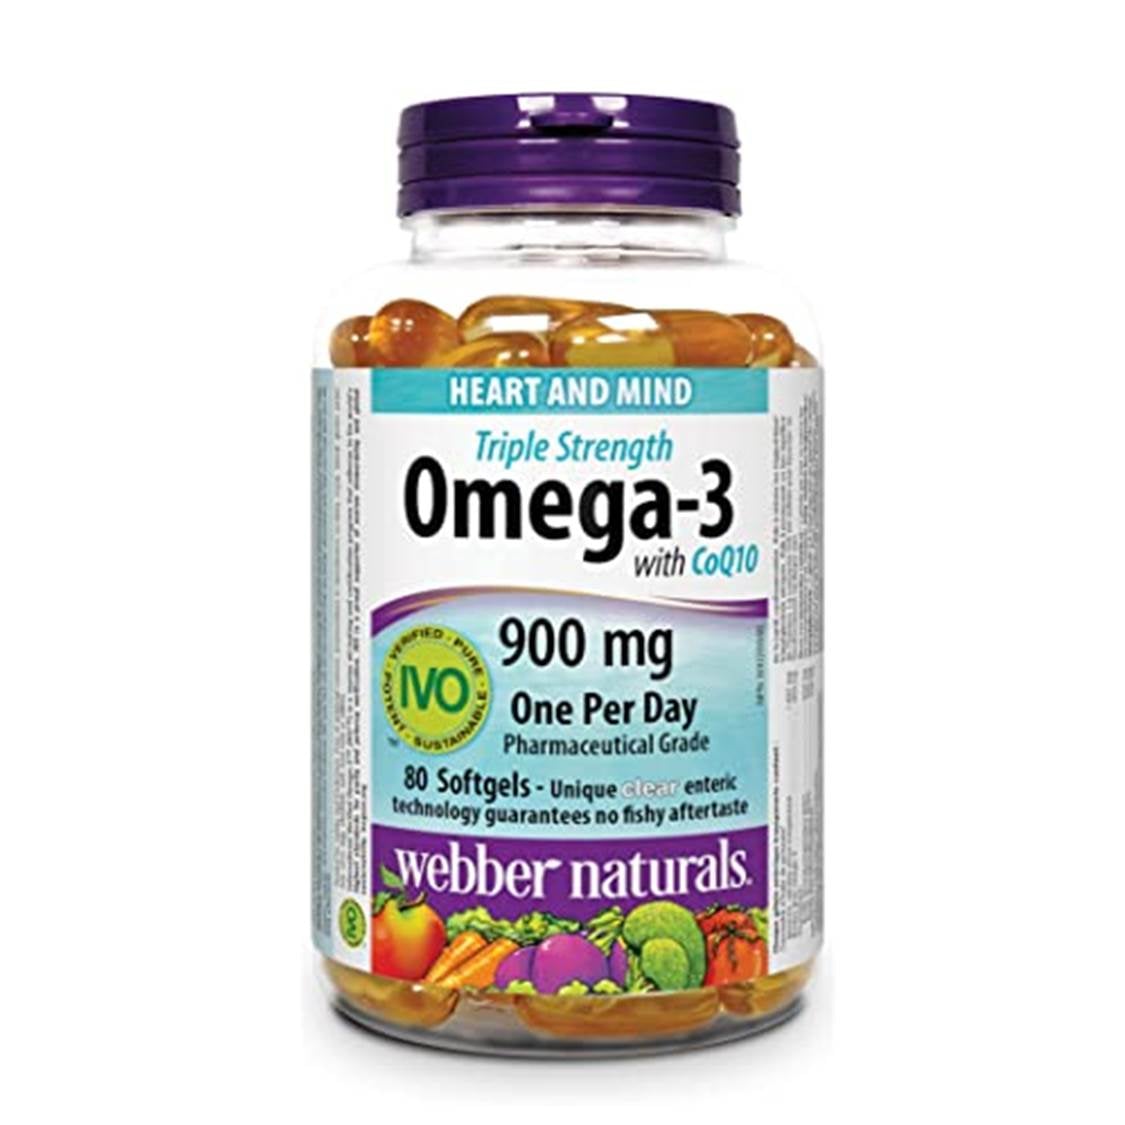 webber-naturals-triple-strength-omega-3-900mg-epa-dha-80softgels  三倍強效 Omega-3 (900 毫克 EPA / DHA) 80粒 (超值加量裝)